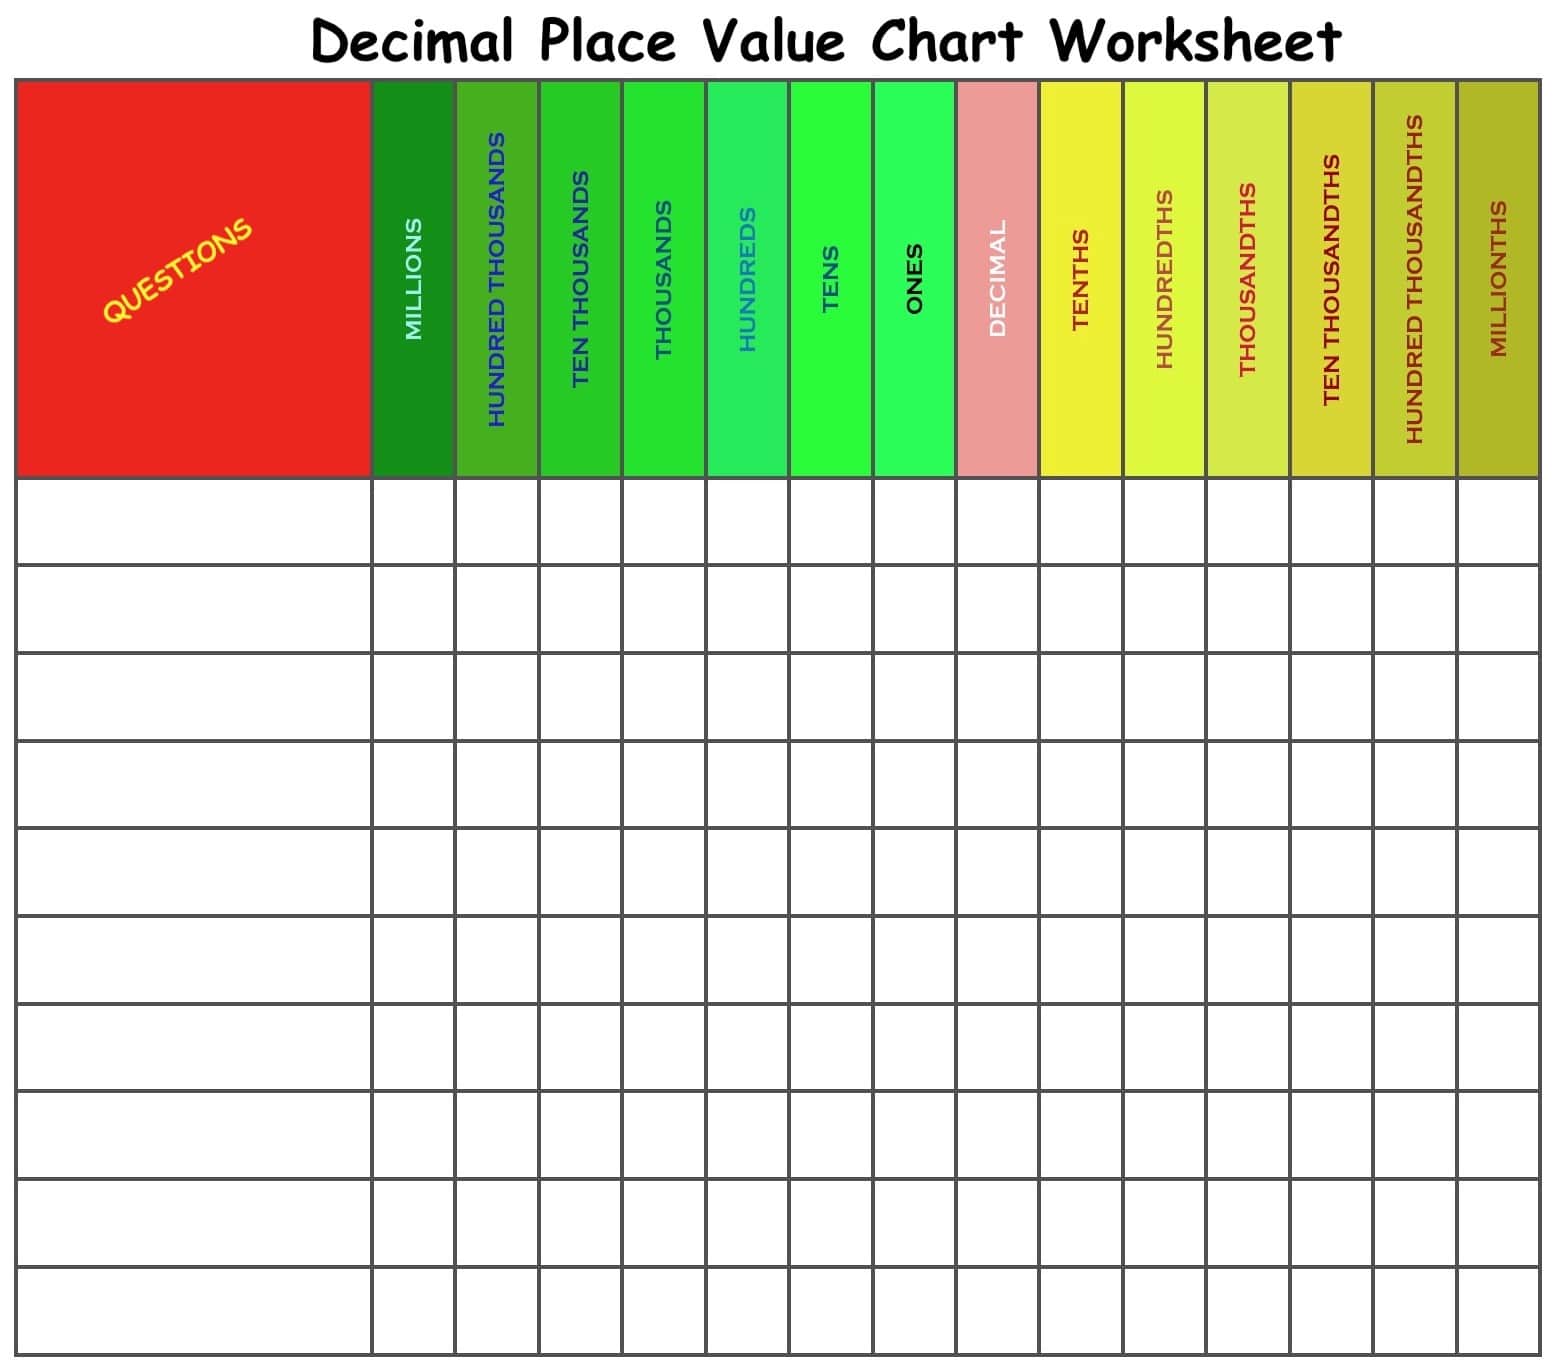 Value chart. Place value Chart. Decimal place. 2 Decimal place value. Decimal numbers place value.